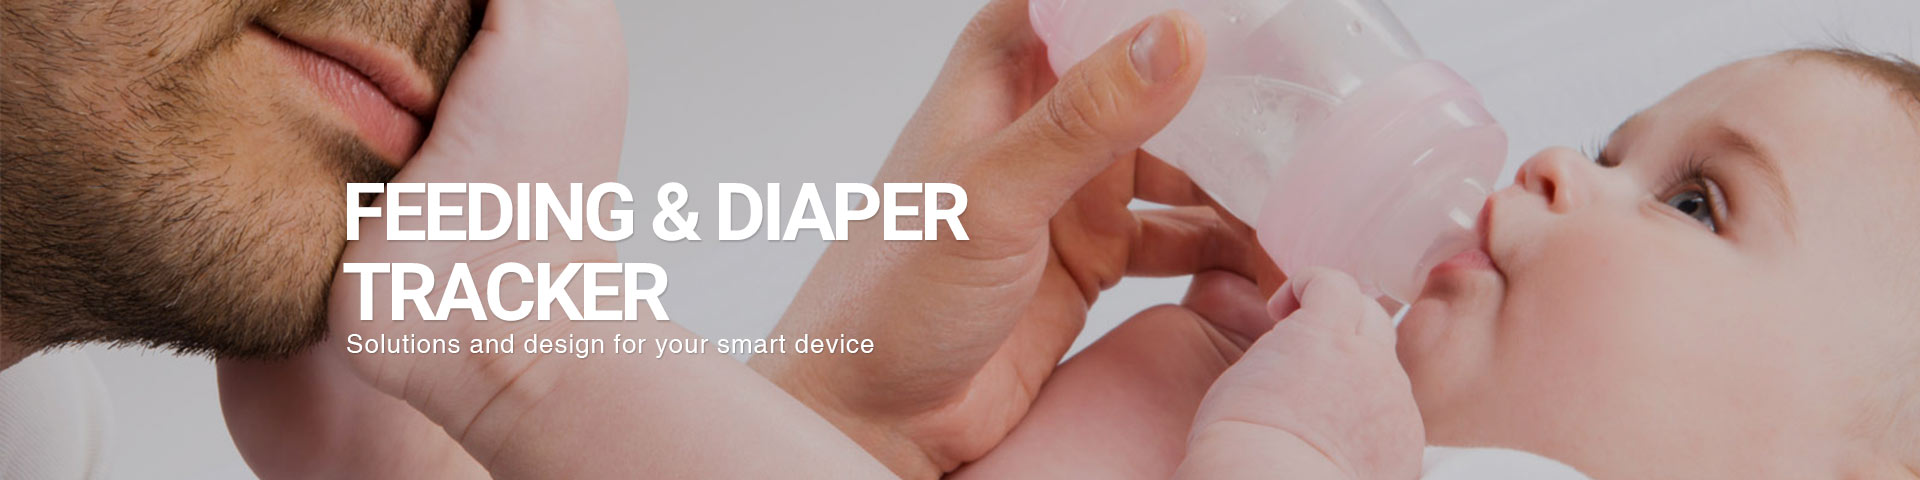 diaper tracker